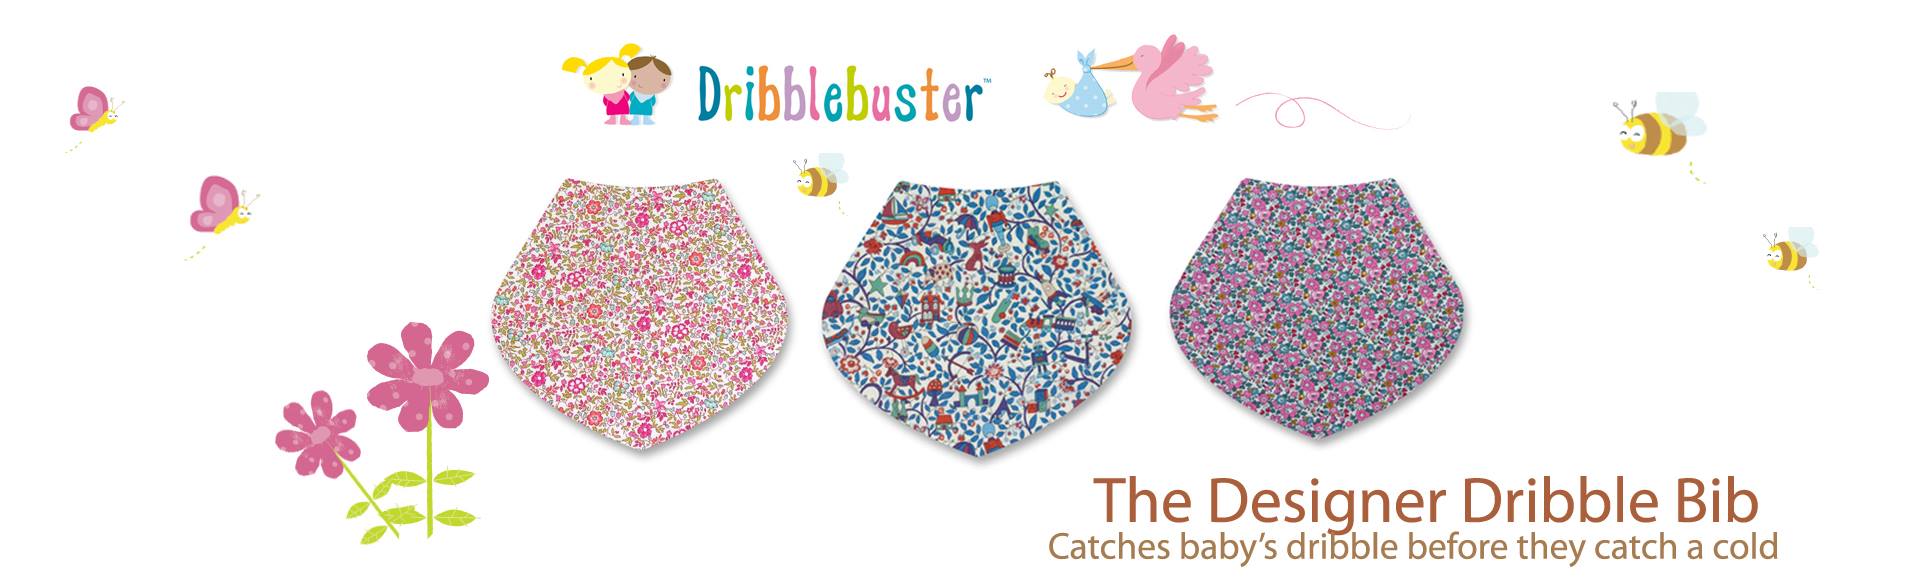 Dribblebuster Baby Bibs's main image